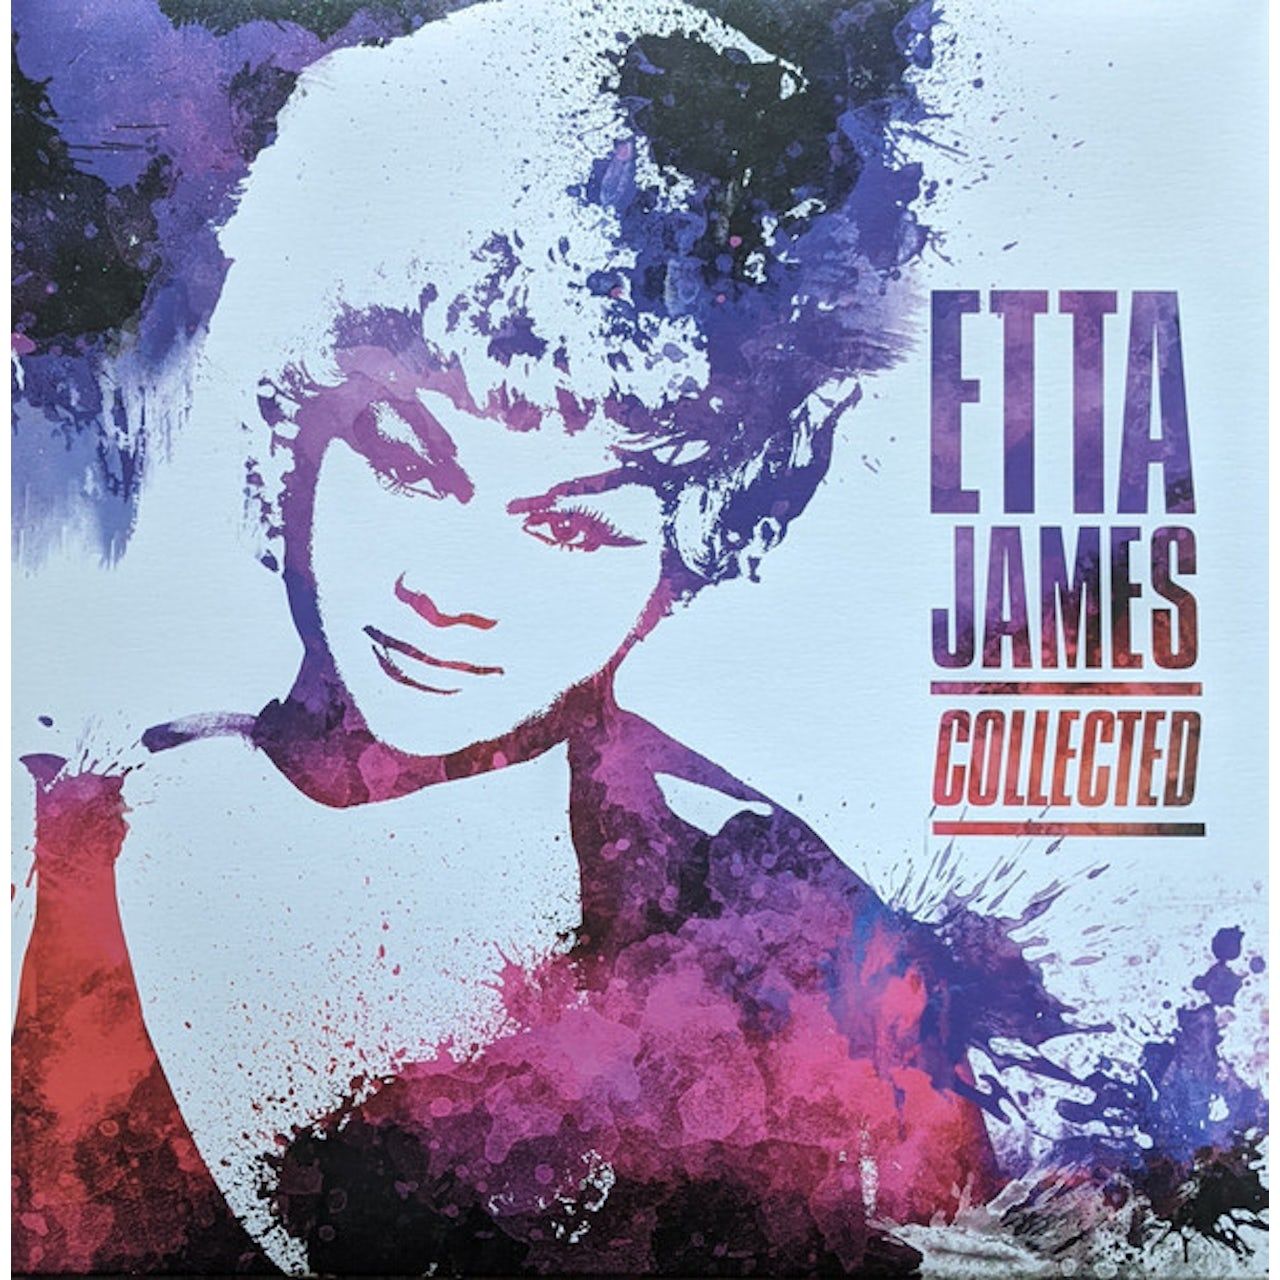 8719262017184, Виниловая пластинка James, Etta, Collected van vliet elma mum tell me a give